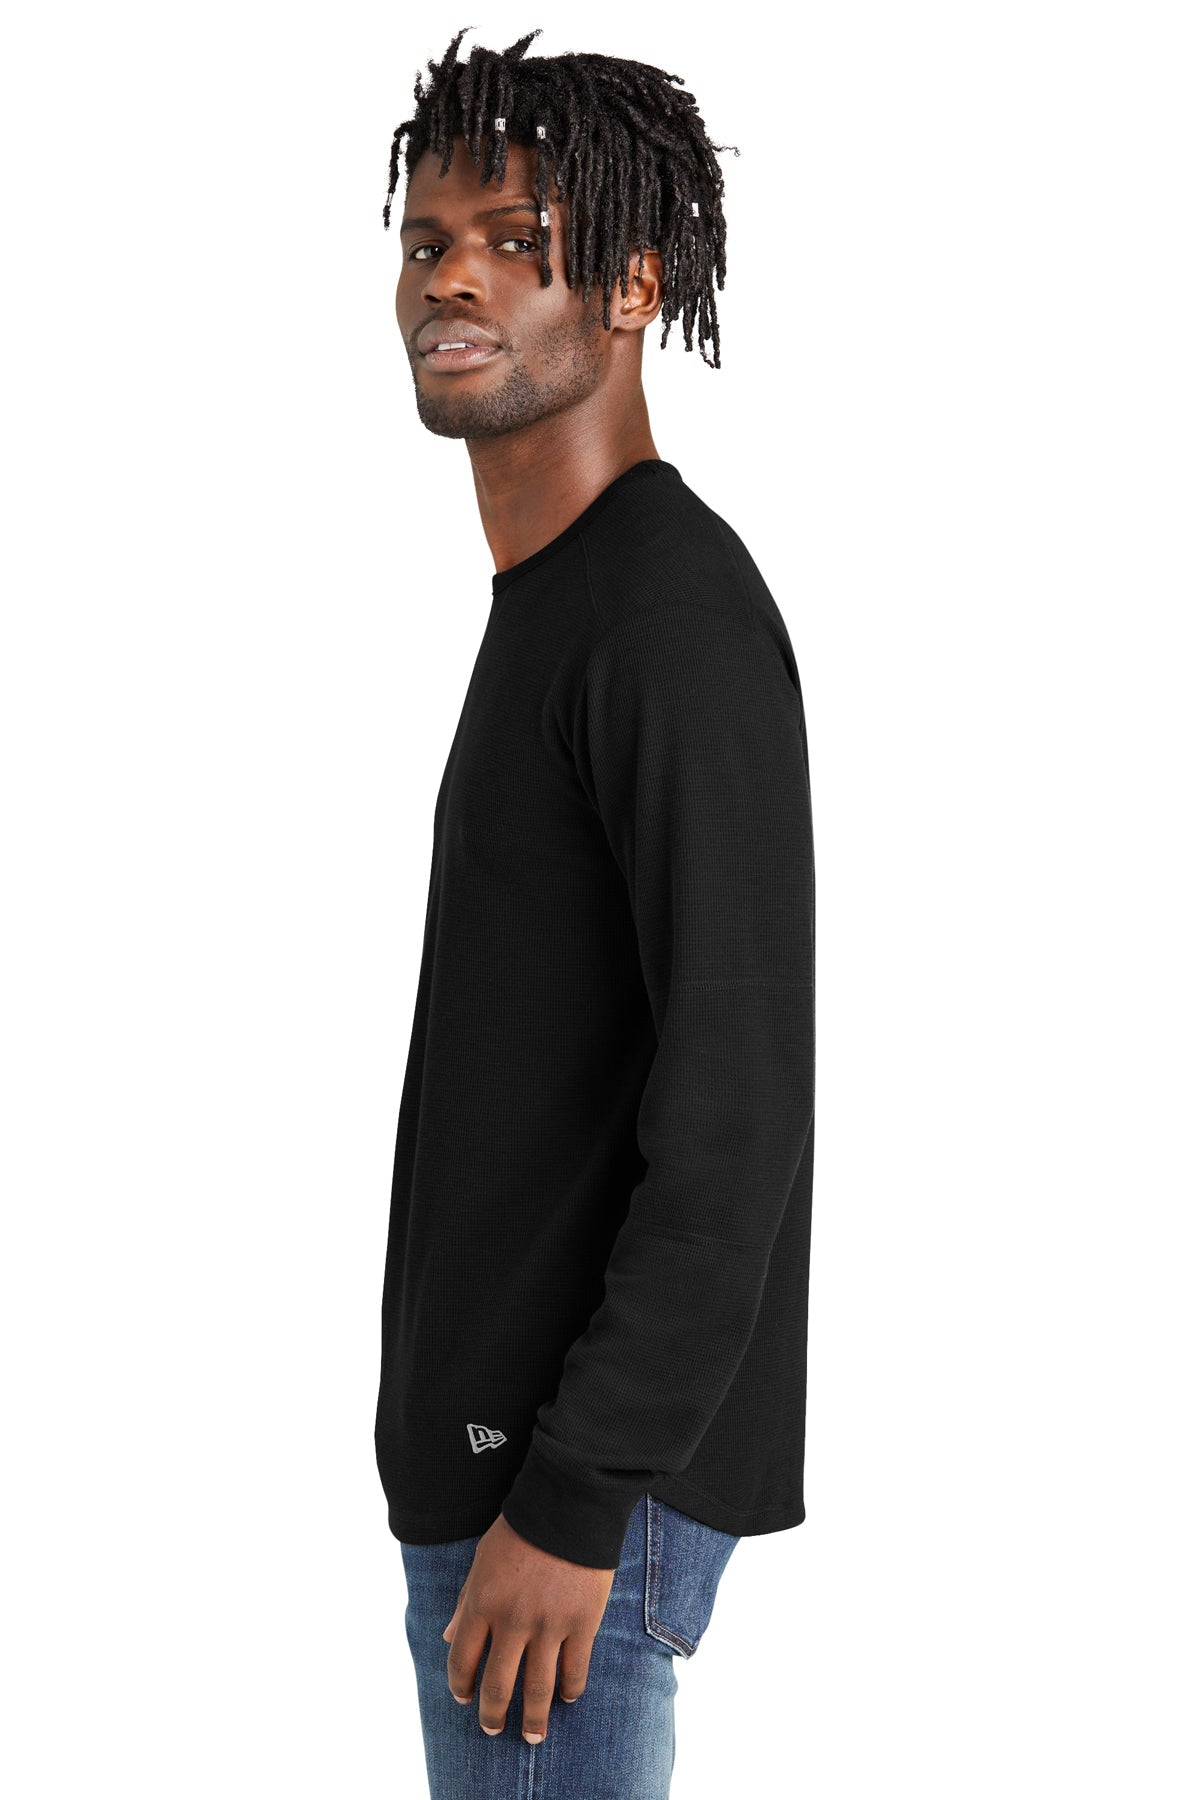 New Era Thermal Long Sleeve Custom T Shirts, Black